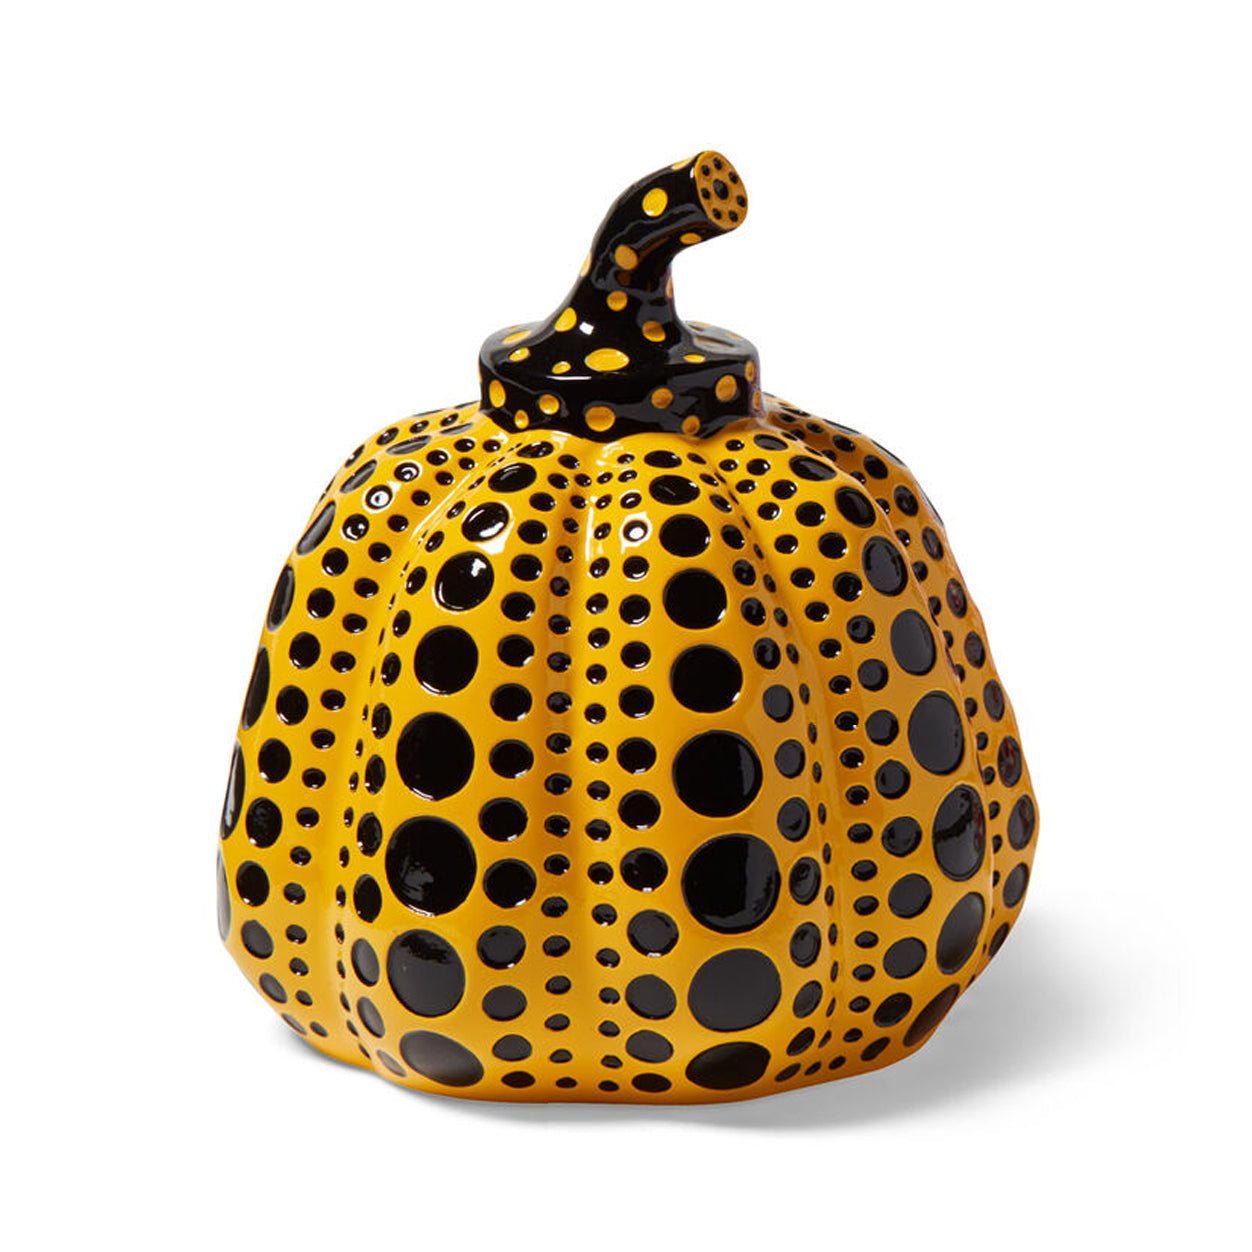 Yayoi Kusama, 'Pumpkins', 2015 | Available for Sale | Image of Yellow and Black Pumpkin